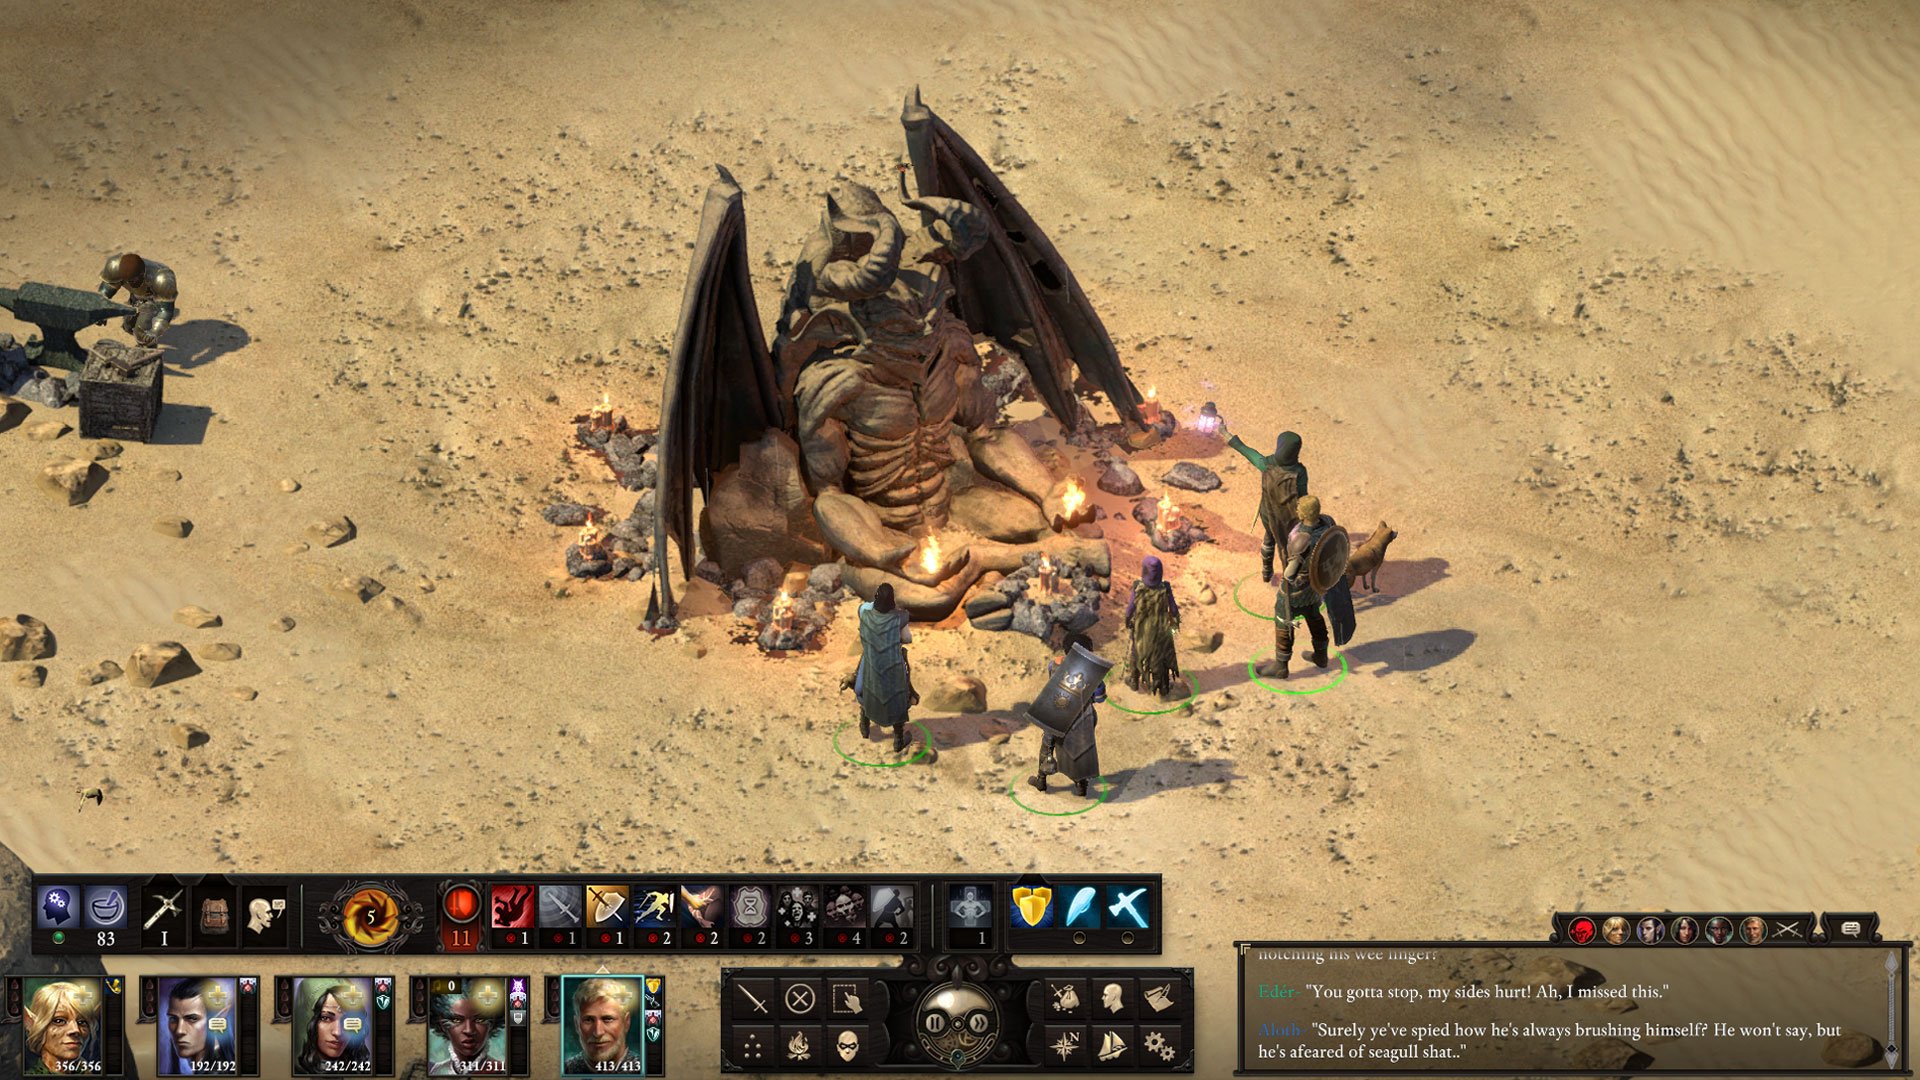 Скриншот 2 к игре Pillars of Eternity II: Deadfire Obsidian Edition v5.0.0.0040 [GOG] (2018)